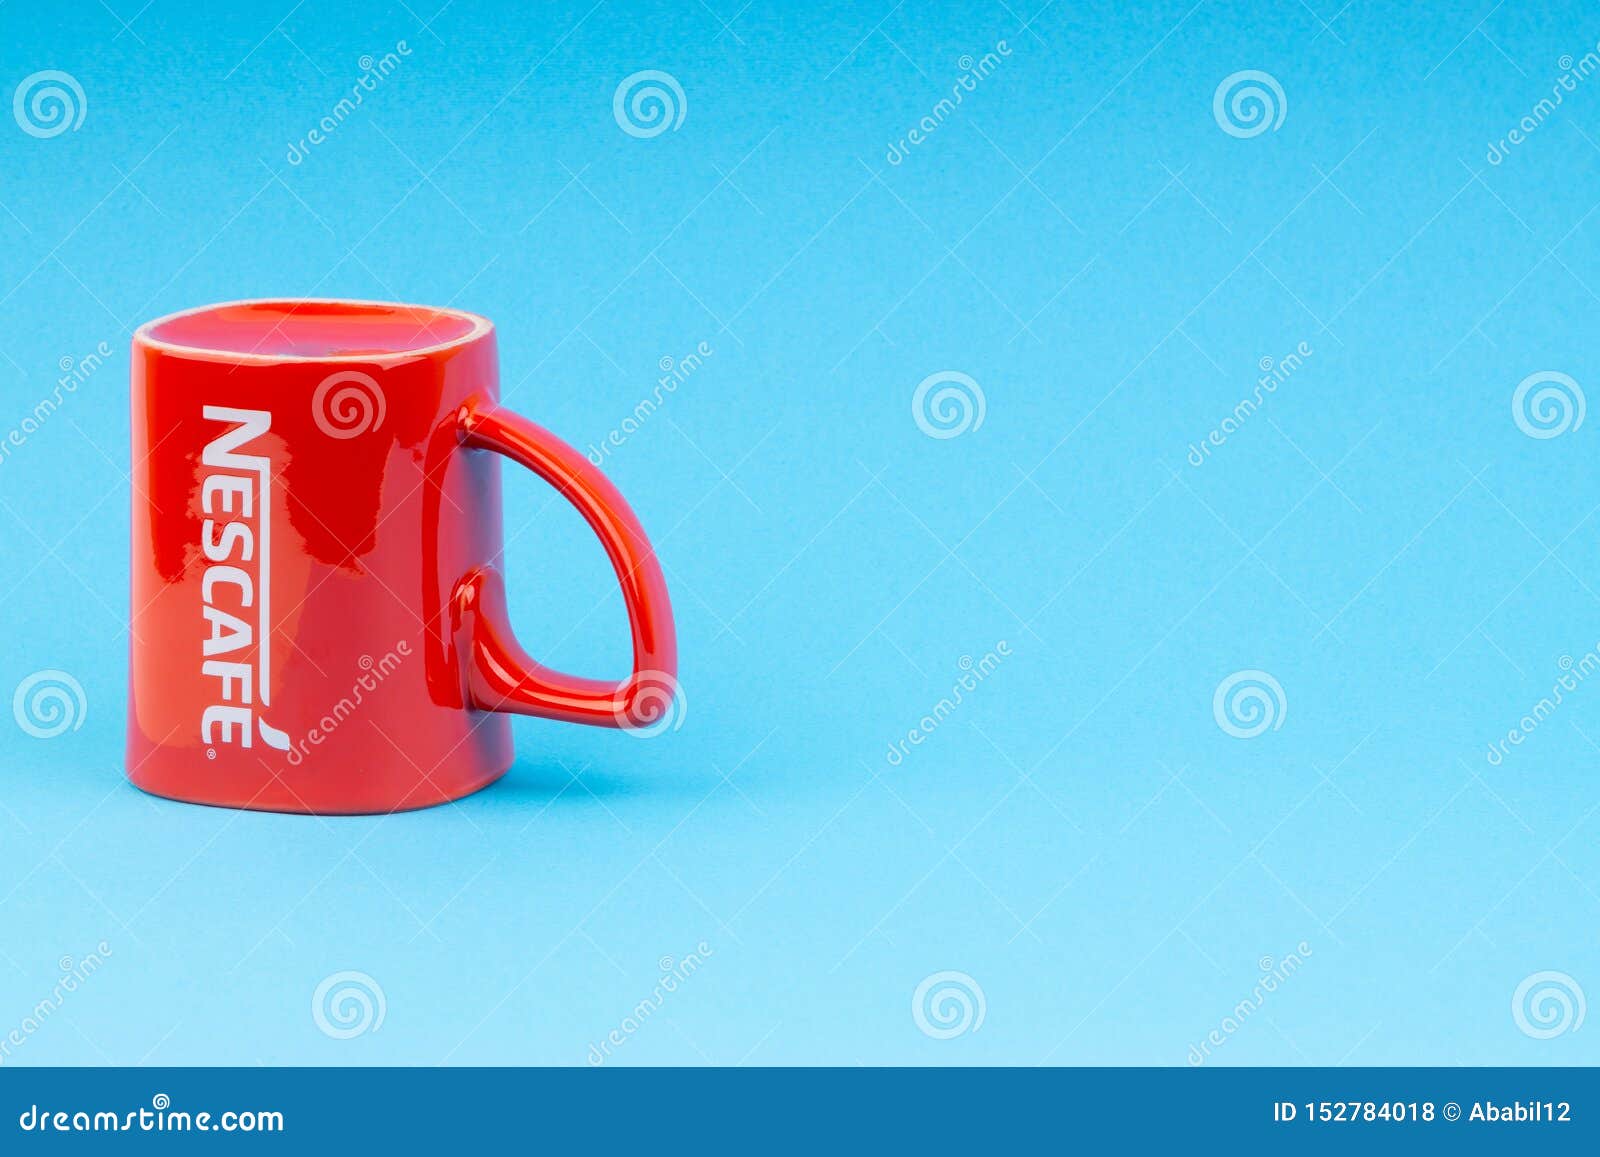 Promotional Red Nescafe Mug On Blue Background Editorial